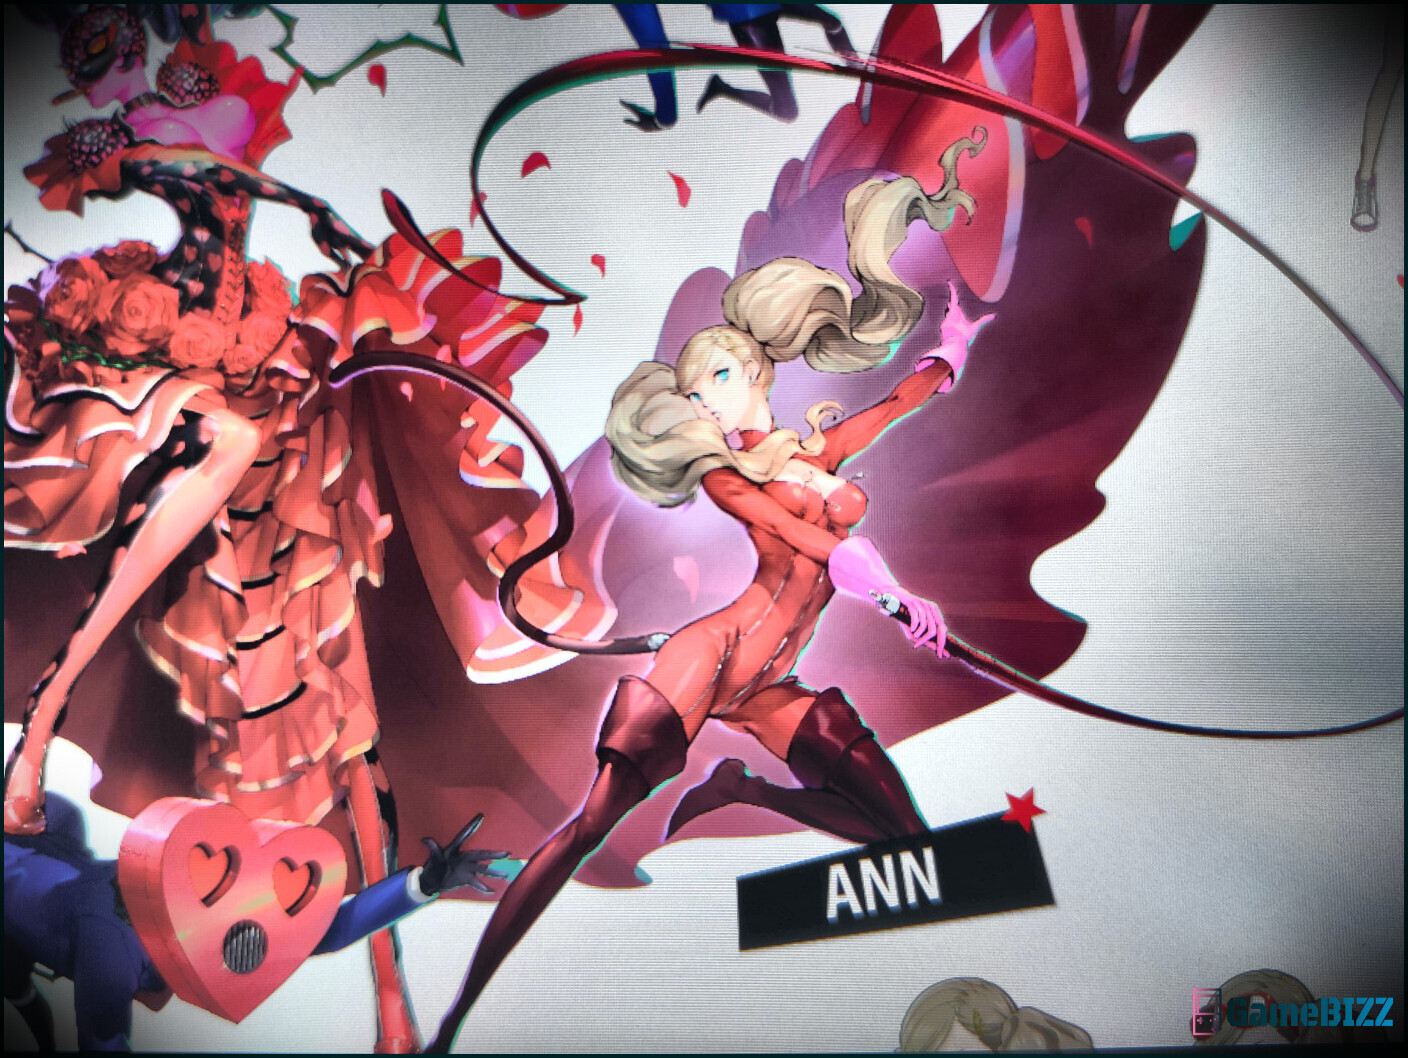 Persona 5 Tactica wird echt gruselig über Anns Outfit